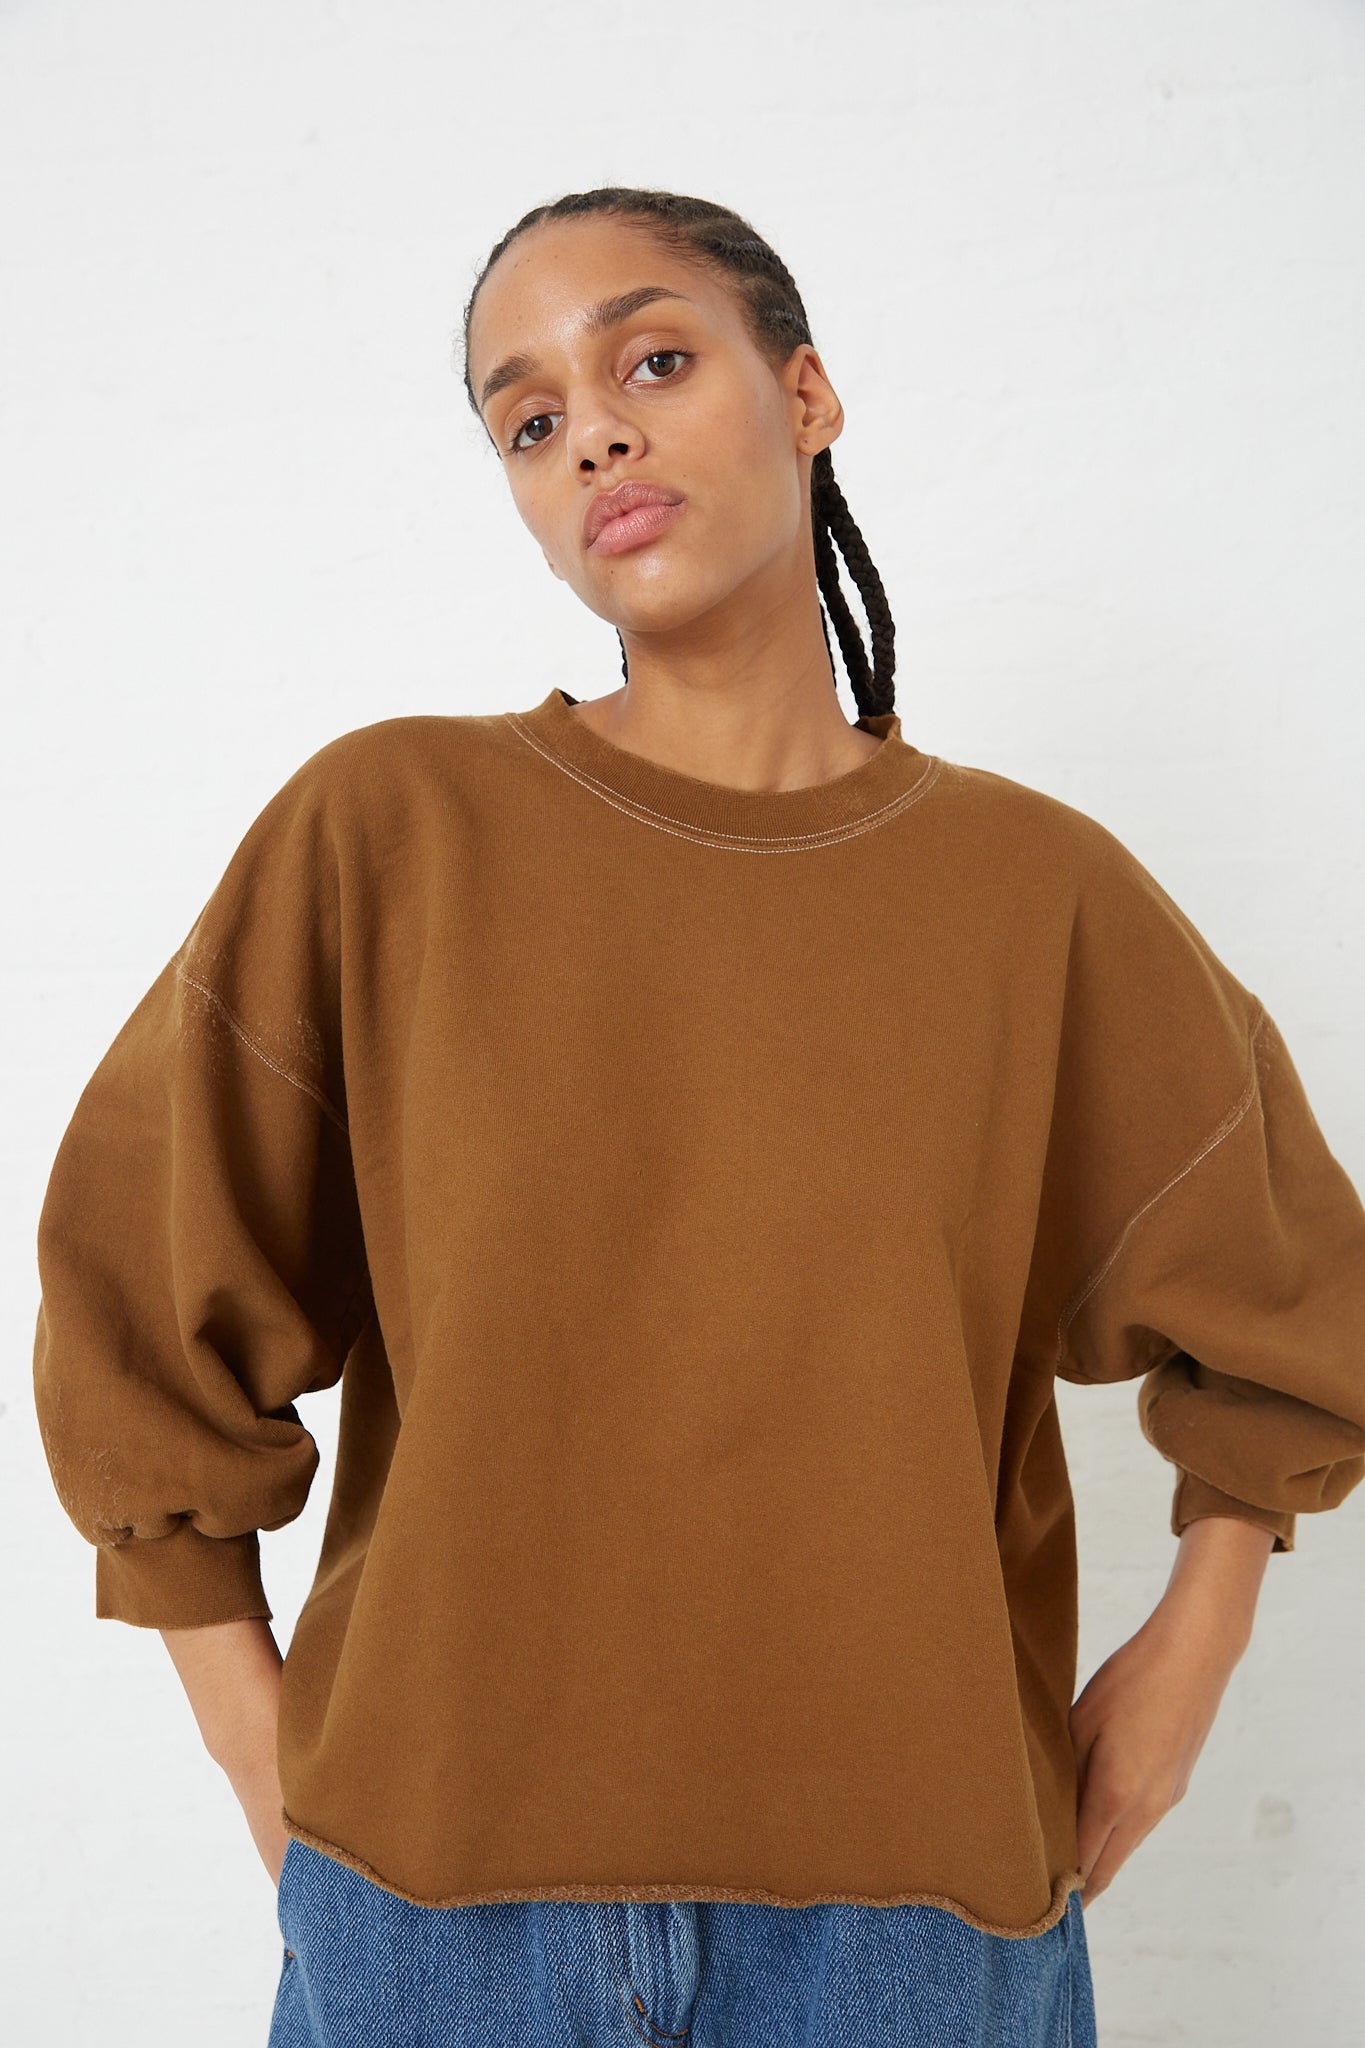 The model is wearing a Rachel Comey Fond Sweatshirt in Umber.